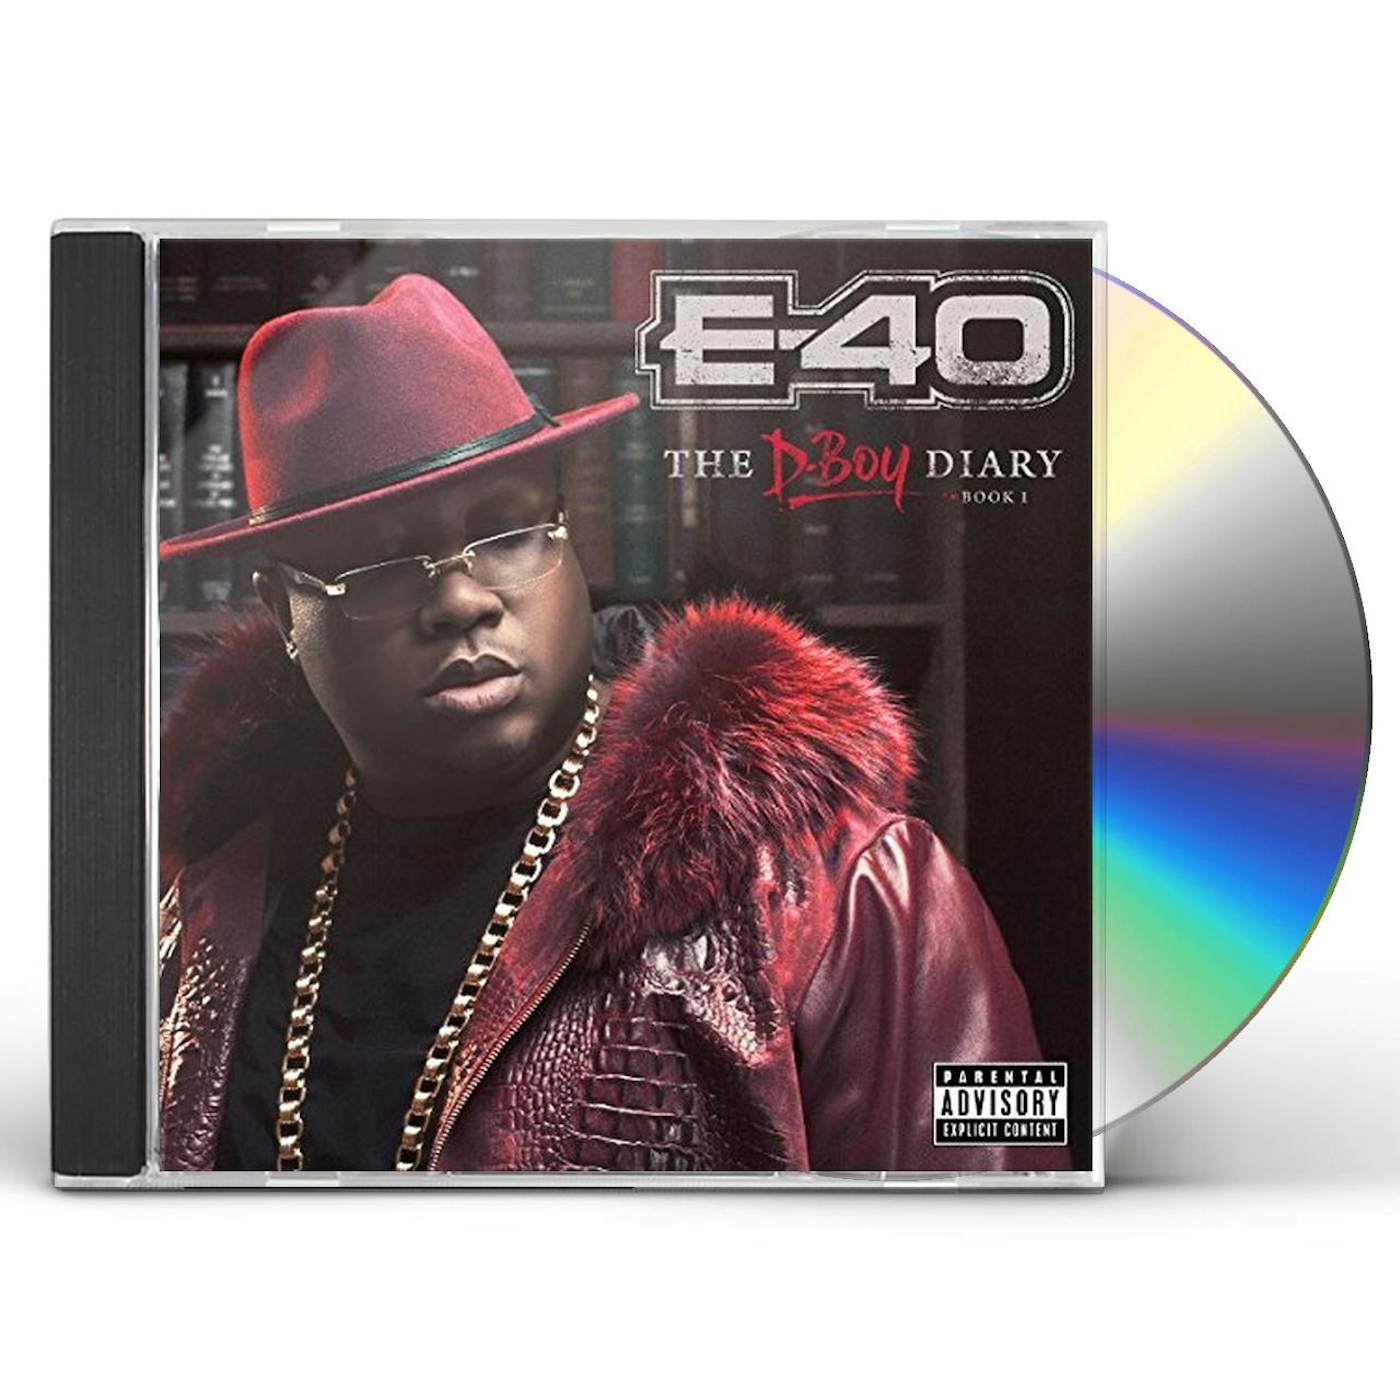 Listen To E-40's Double-Disc Album, The D-Boy Diary